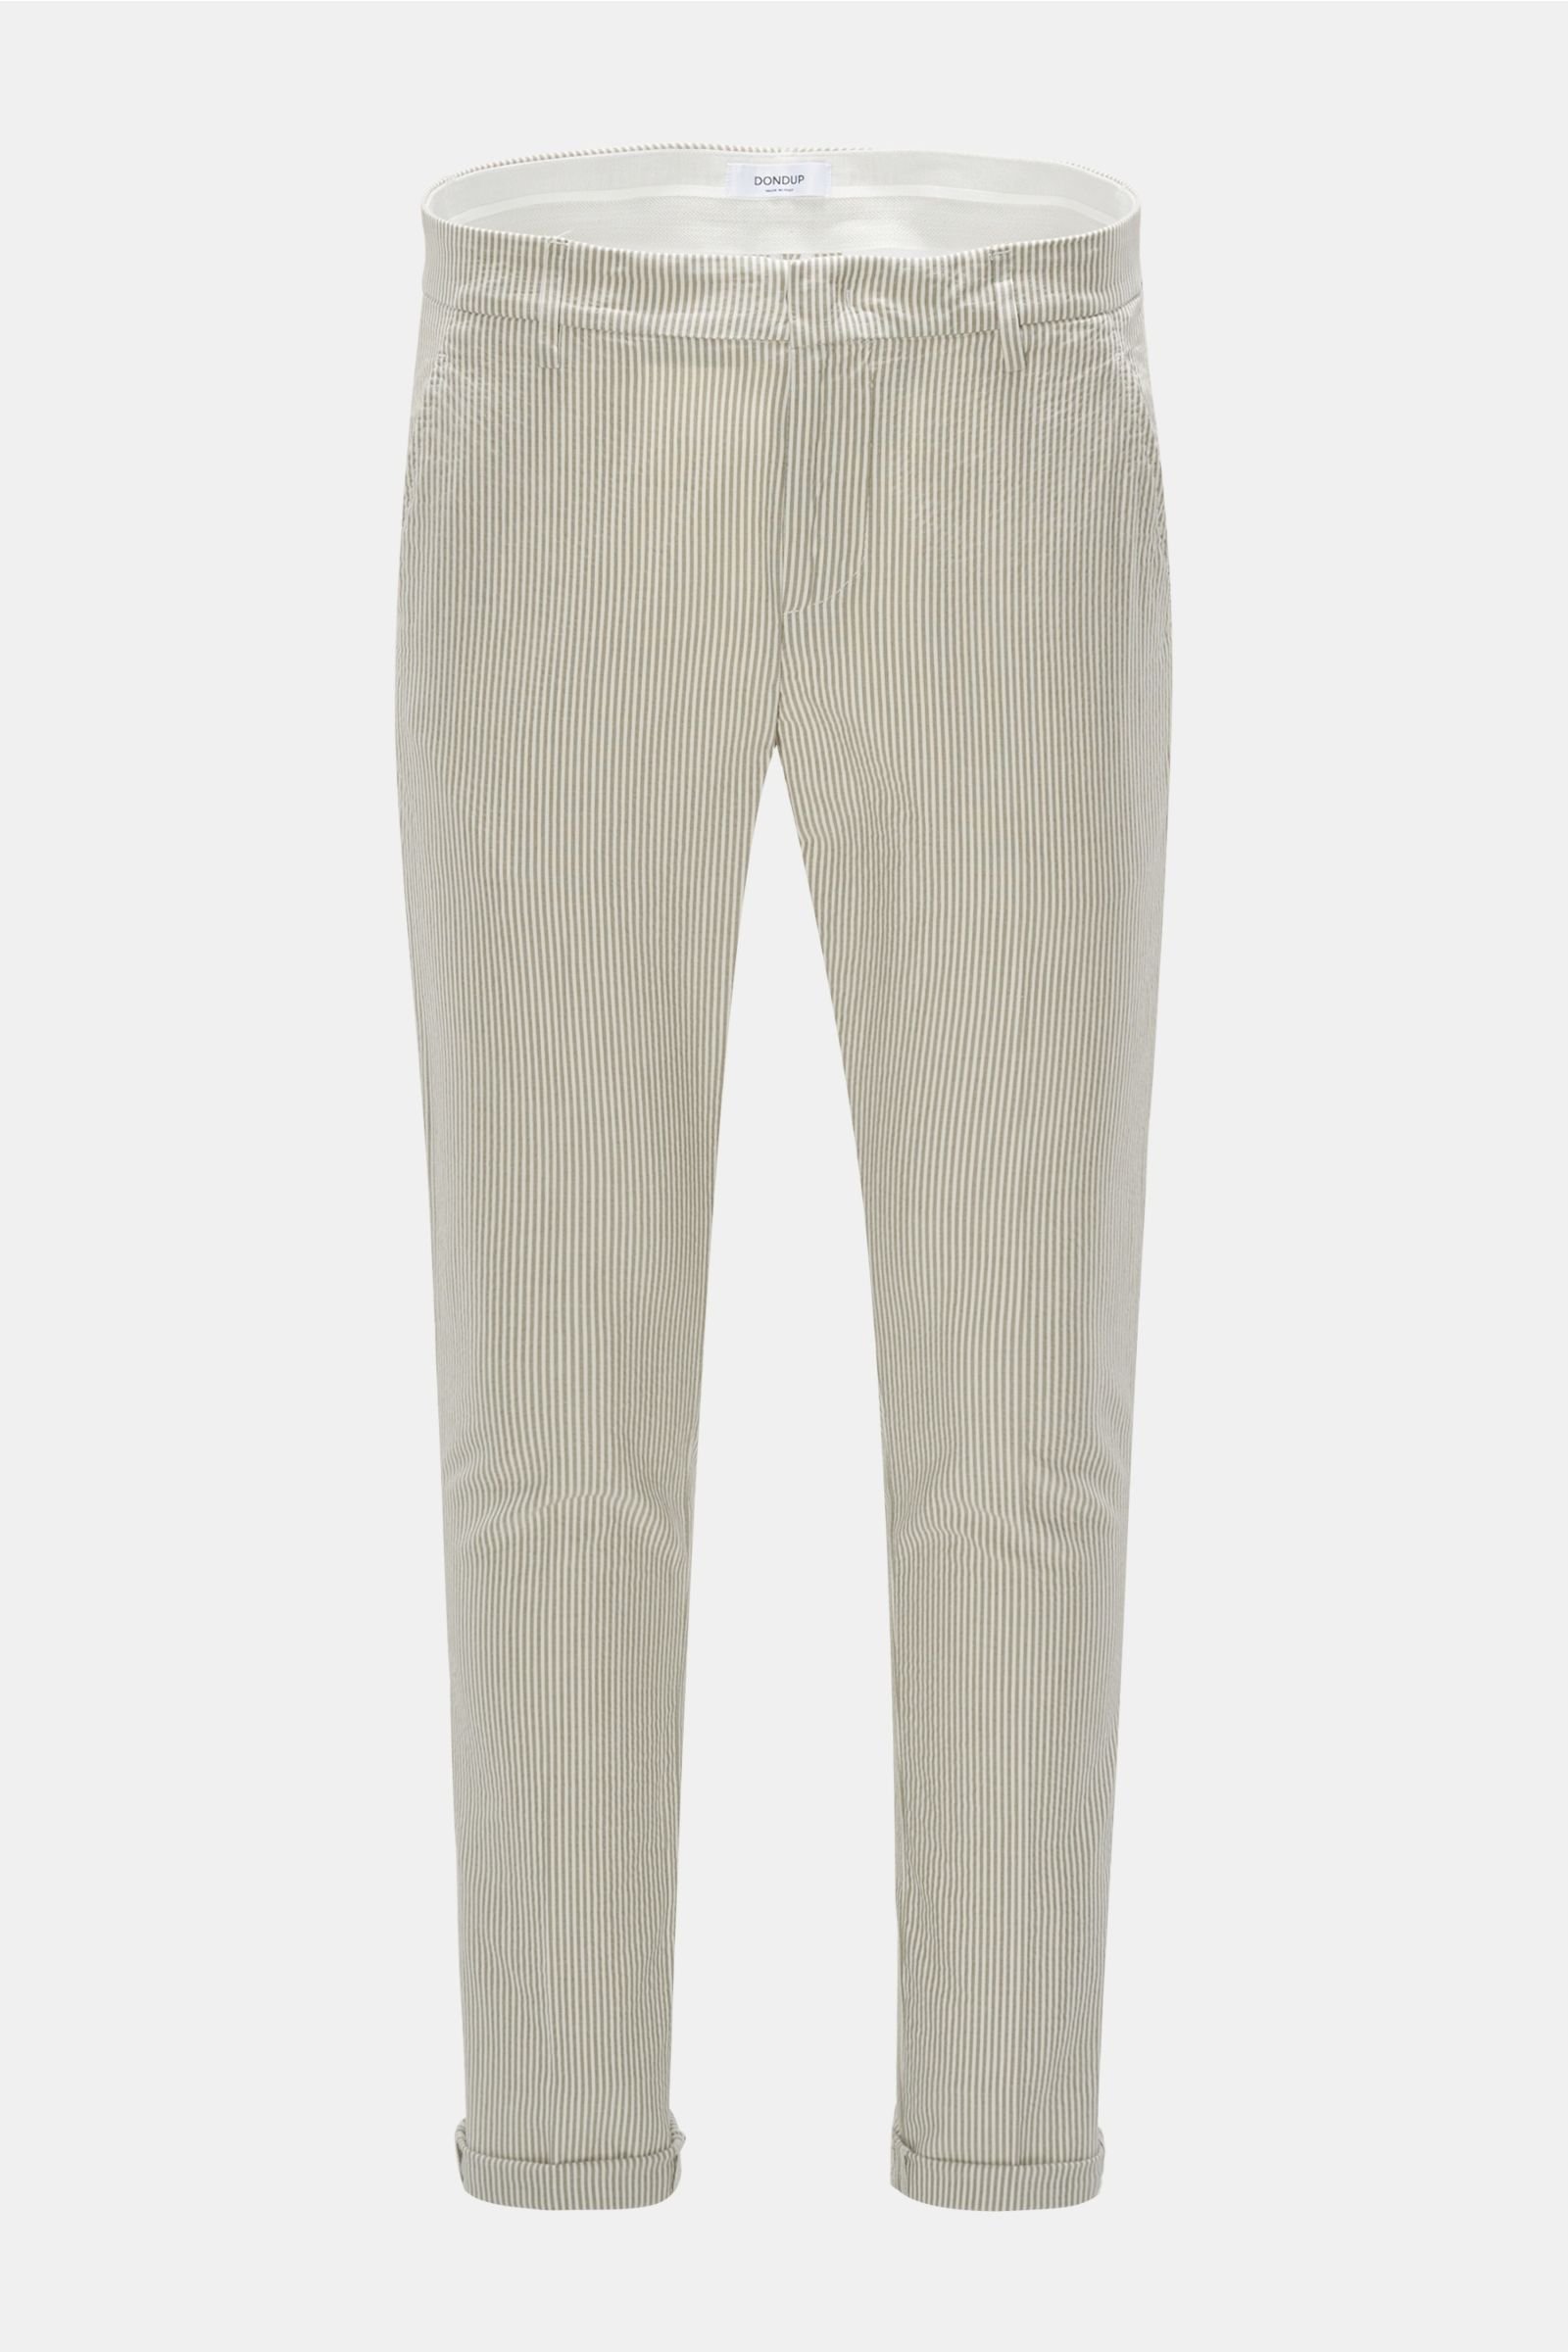 Seersucker trousers 'Gaubert' olive/white striped